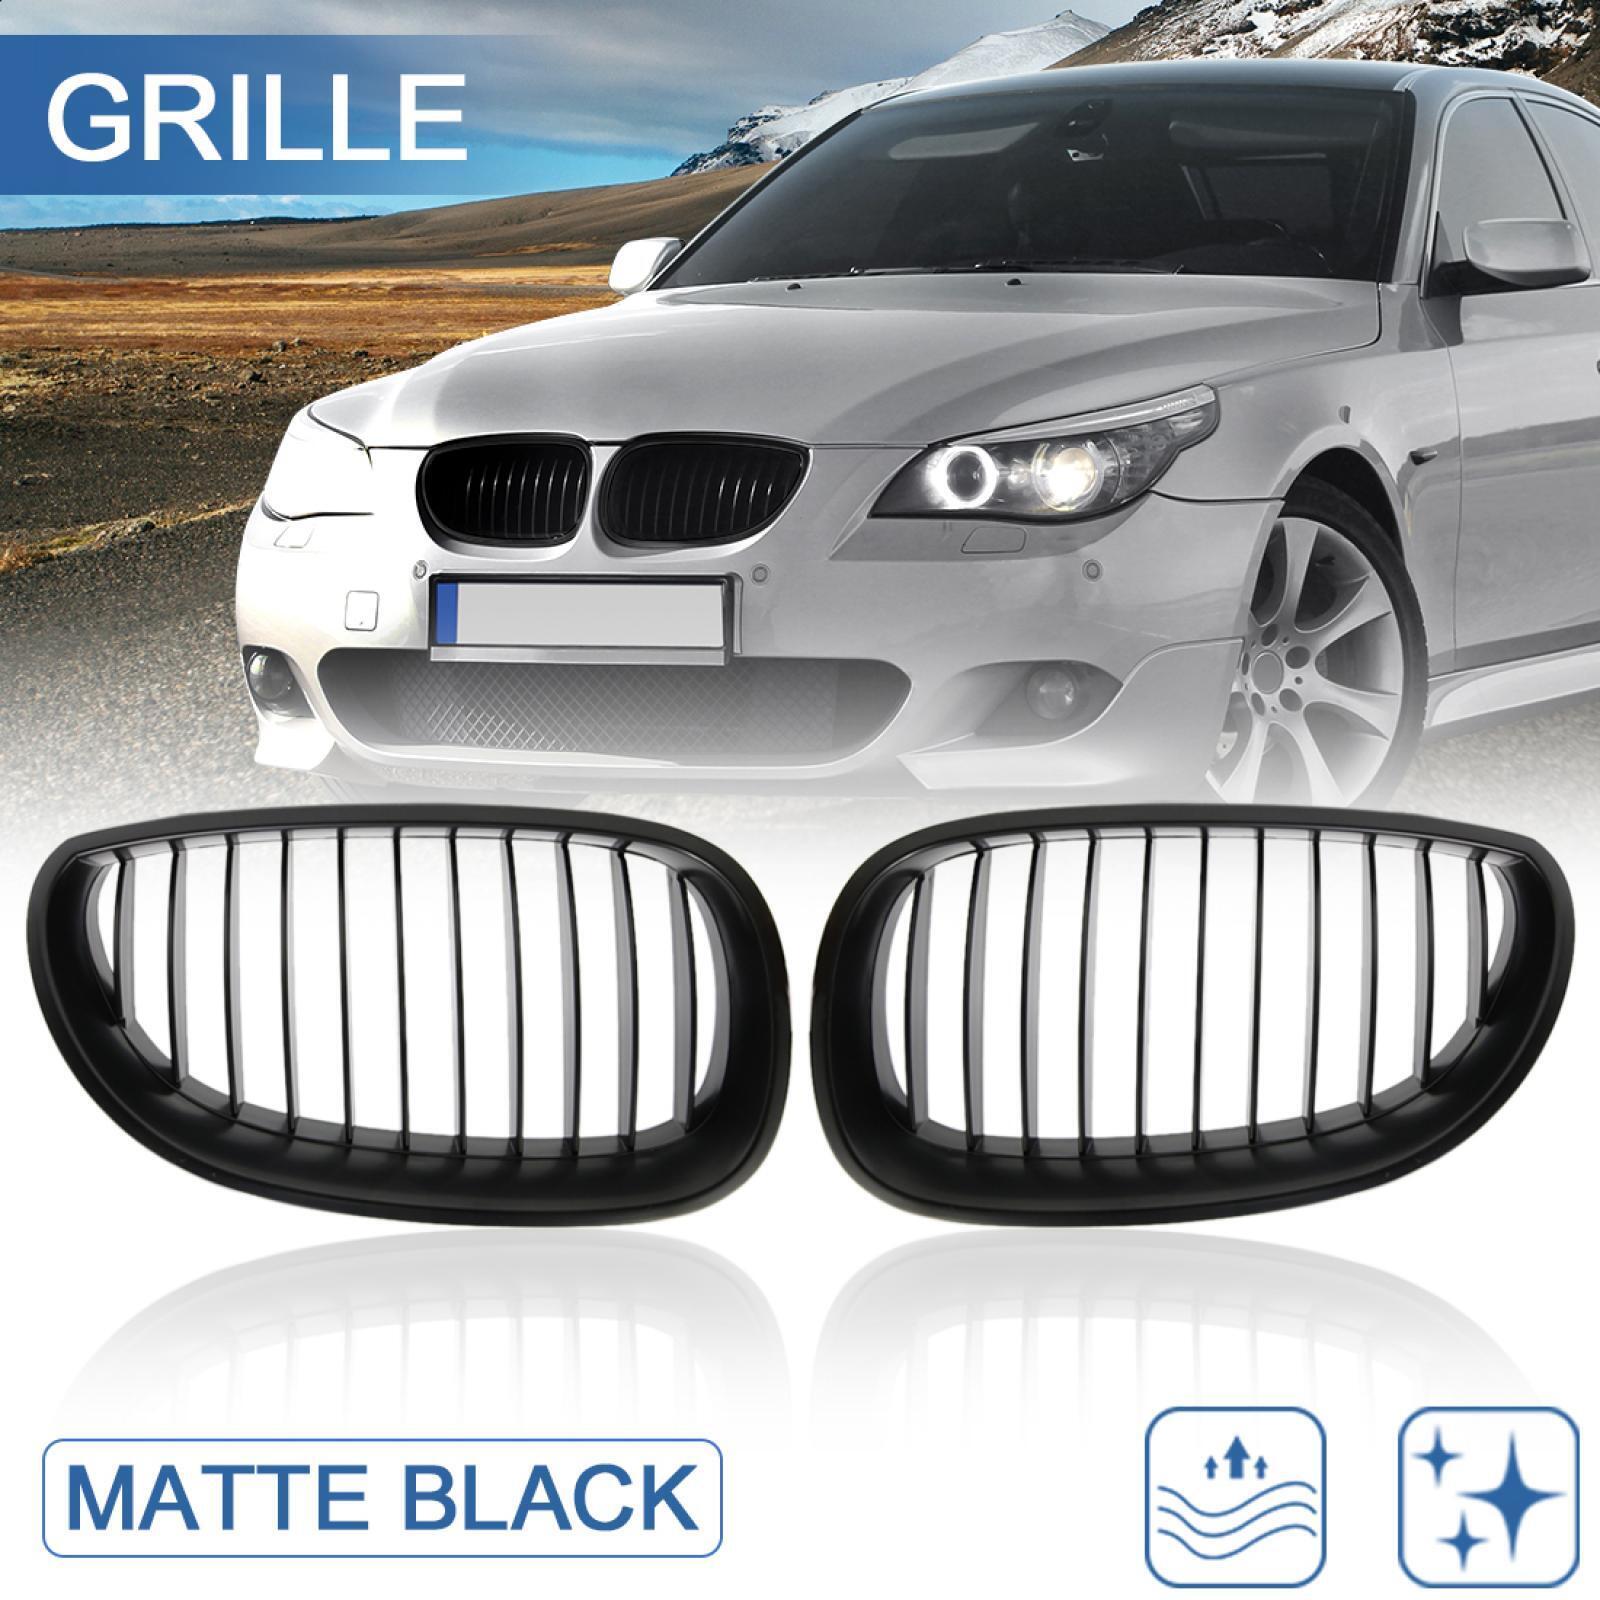 Matte Black Grill Grille For BMW E60 E61 528i 535i 525i 530i 530xi 545i M5 03-09